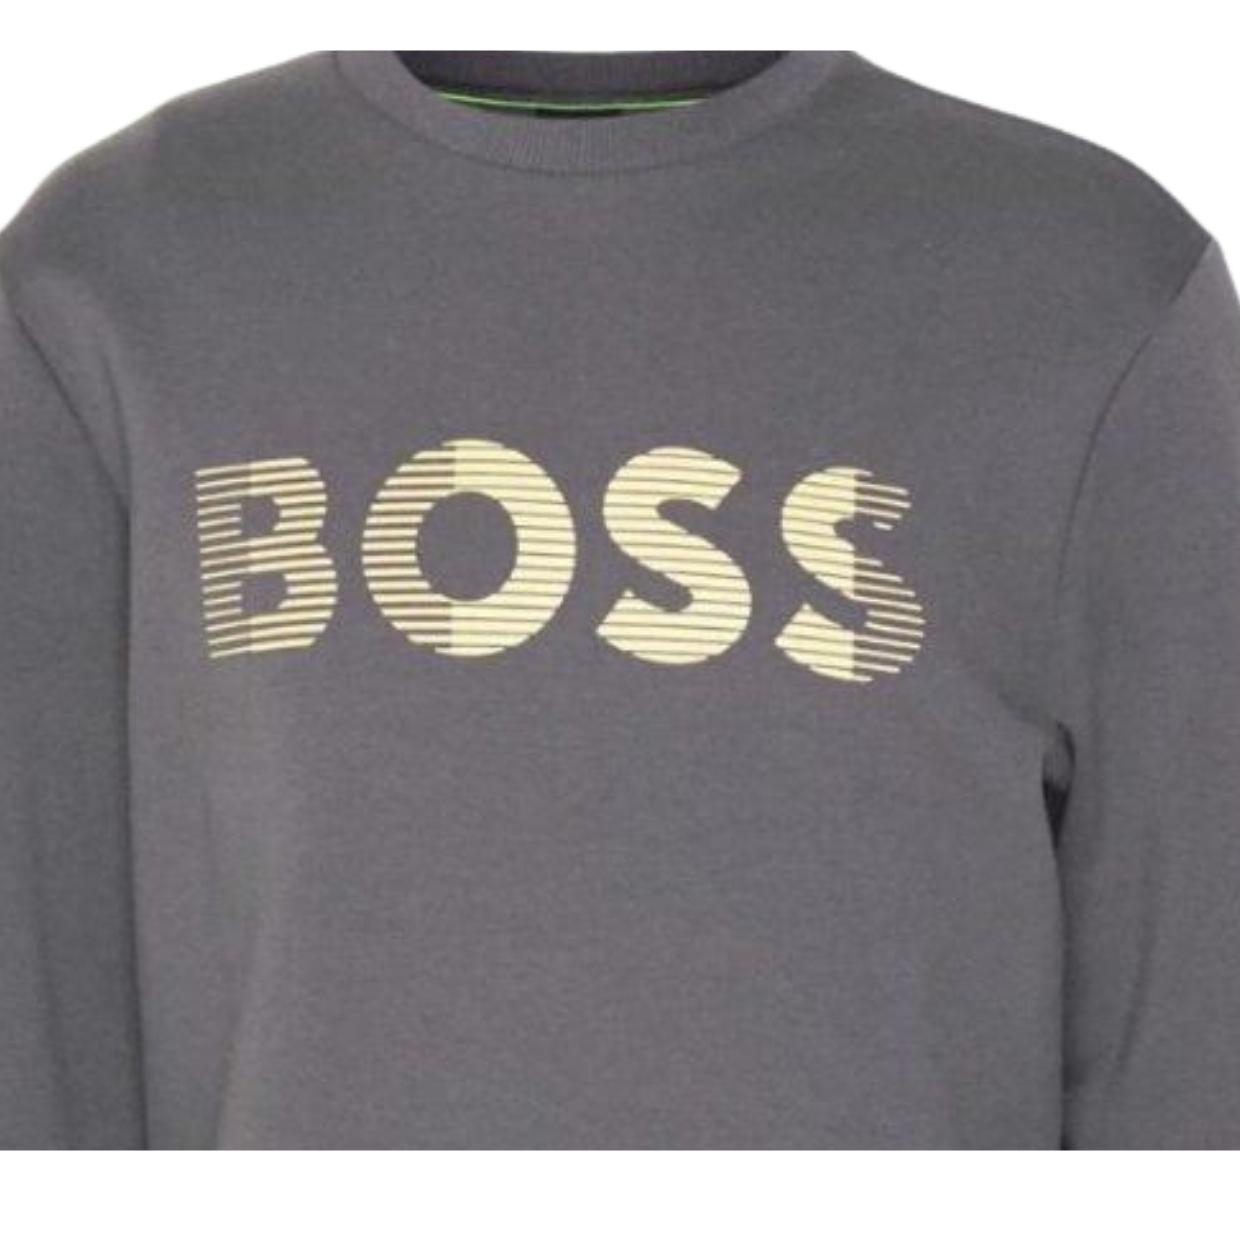 BOSS Salbo 3D Logo Grey Sweatshirt